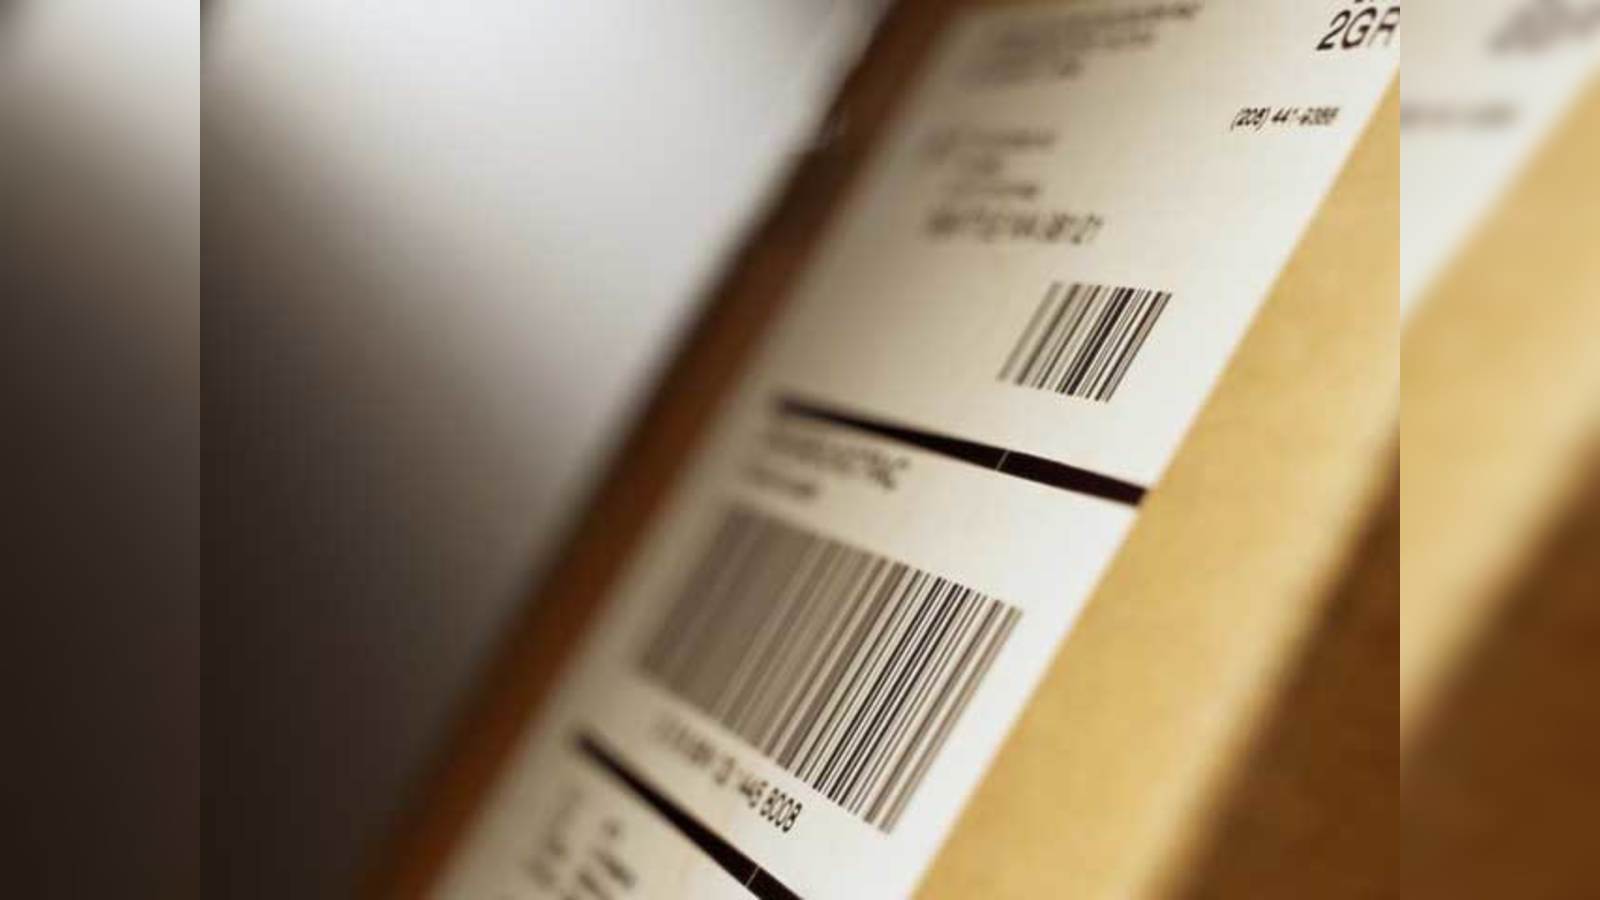 Reselling luxury packaging: A developing market - IPL Packaging